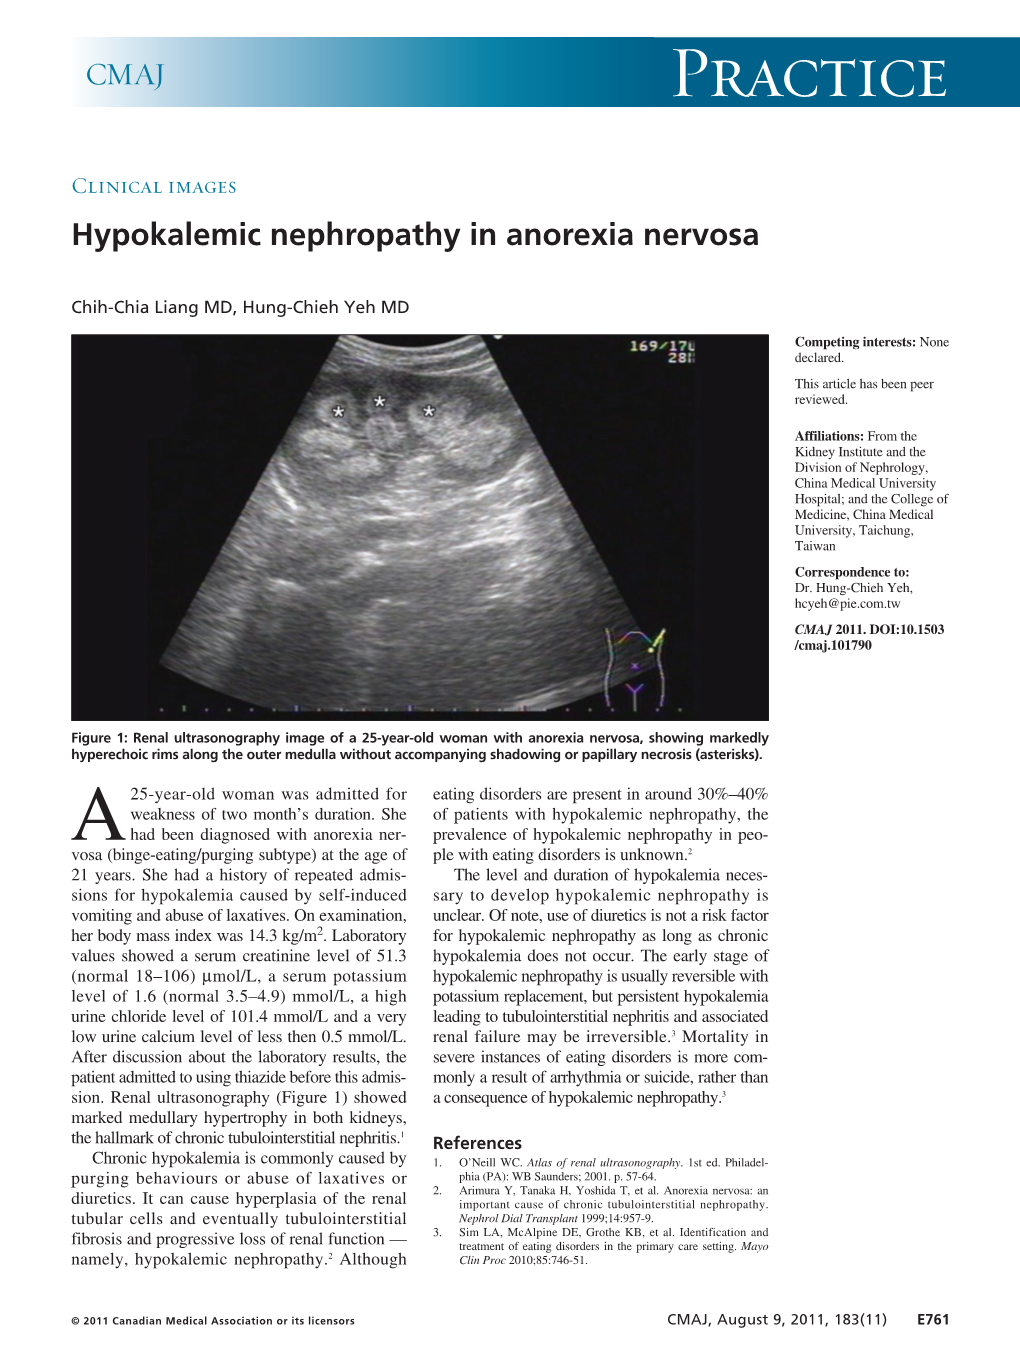 Hypokalemic Nephropathy in Anorexia Nervosa